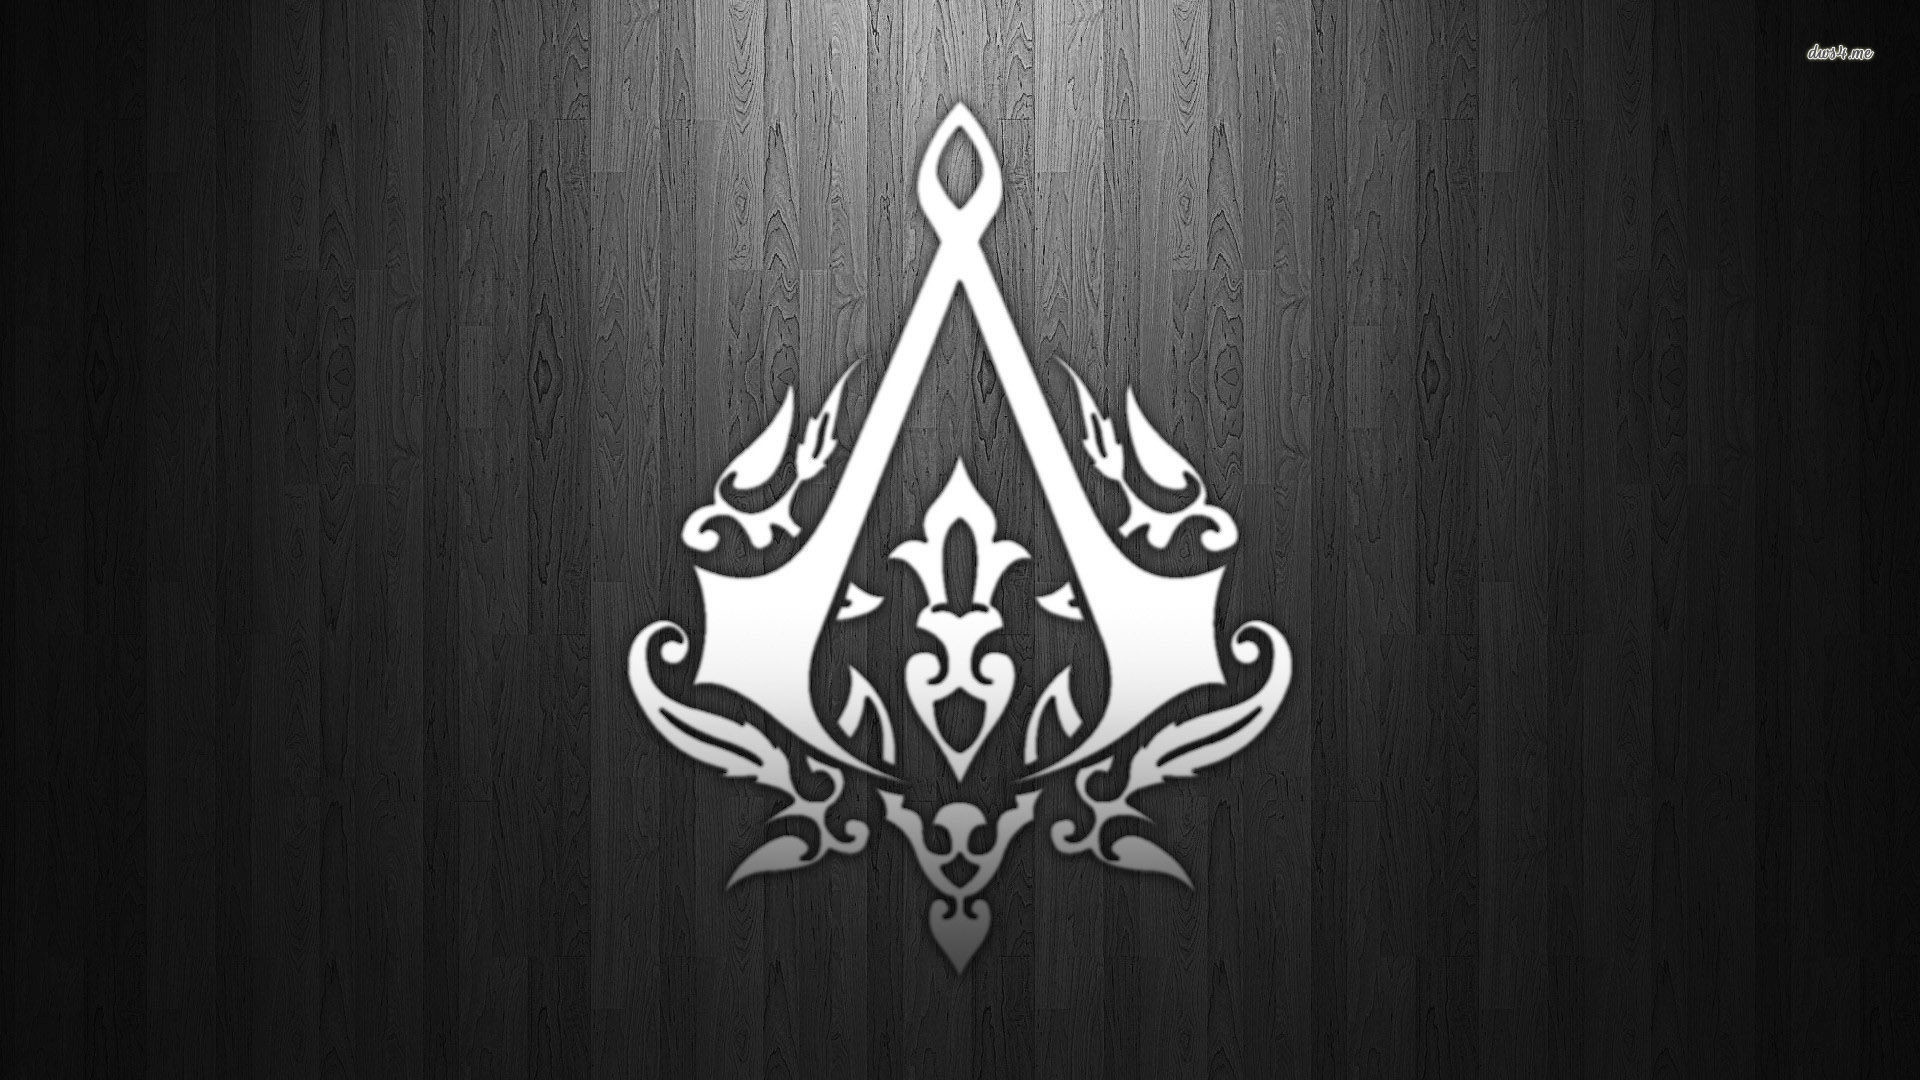 Assassins Creed Logo wallpaper – 1204205